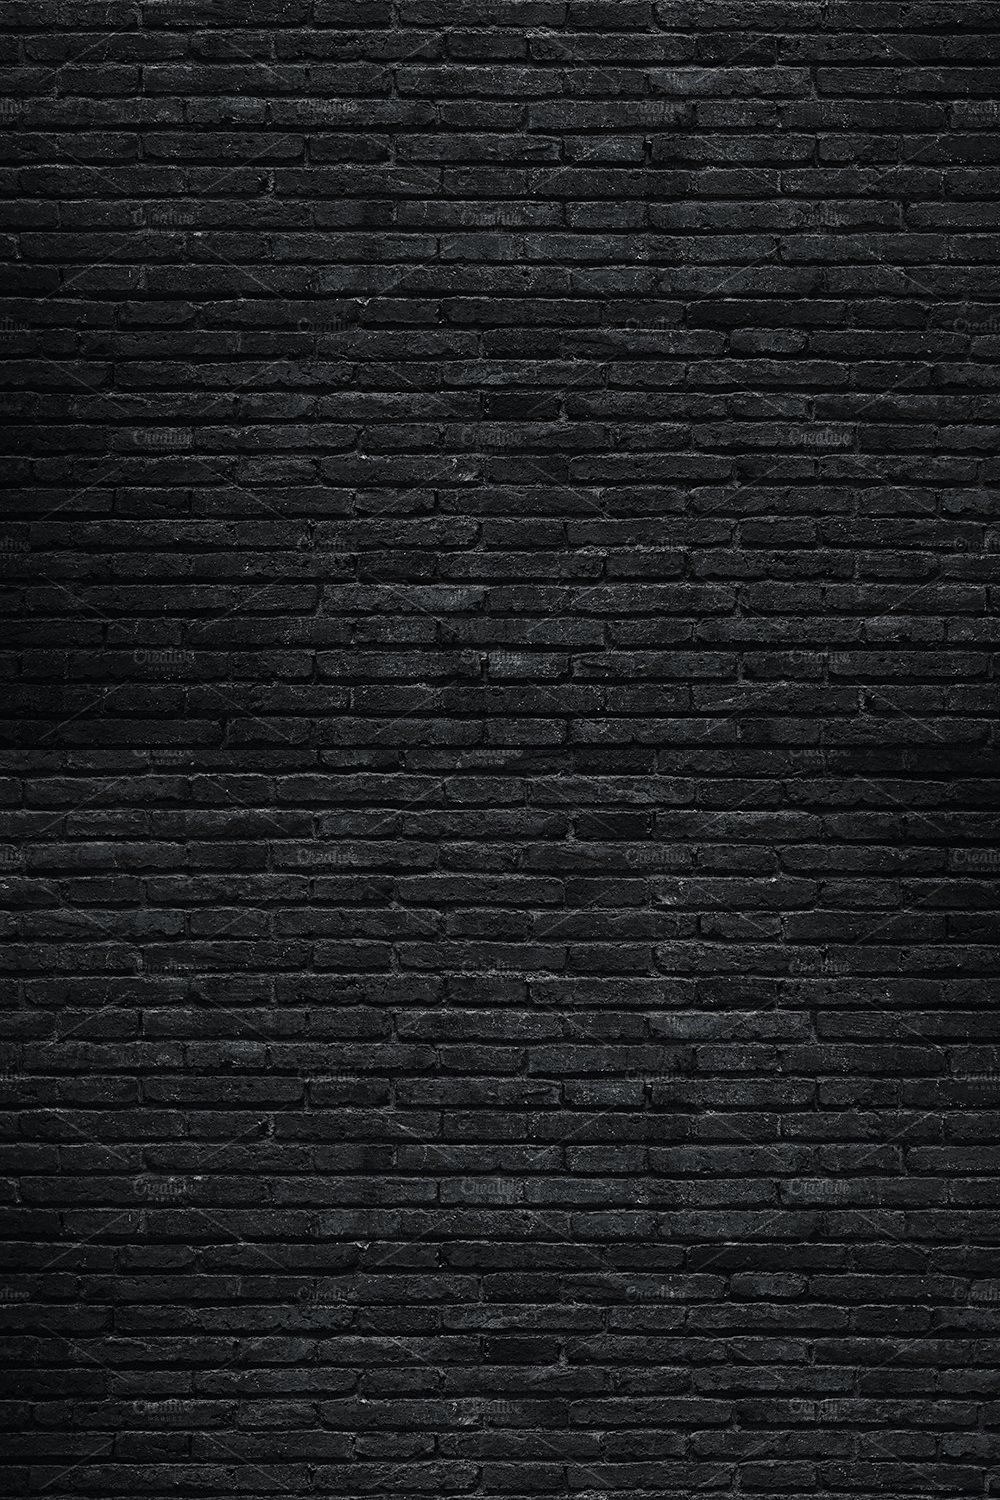 Black brick wall pinterest preview image.